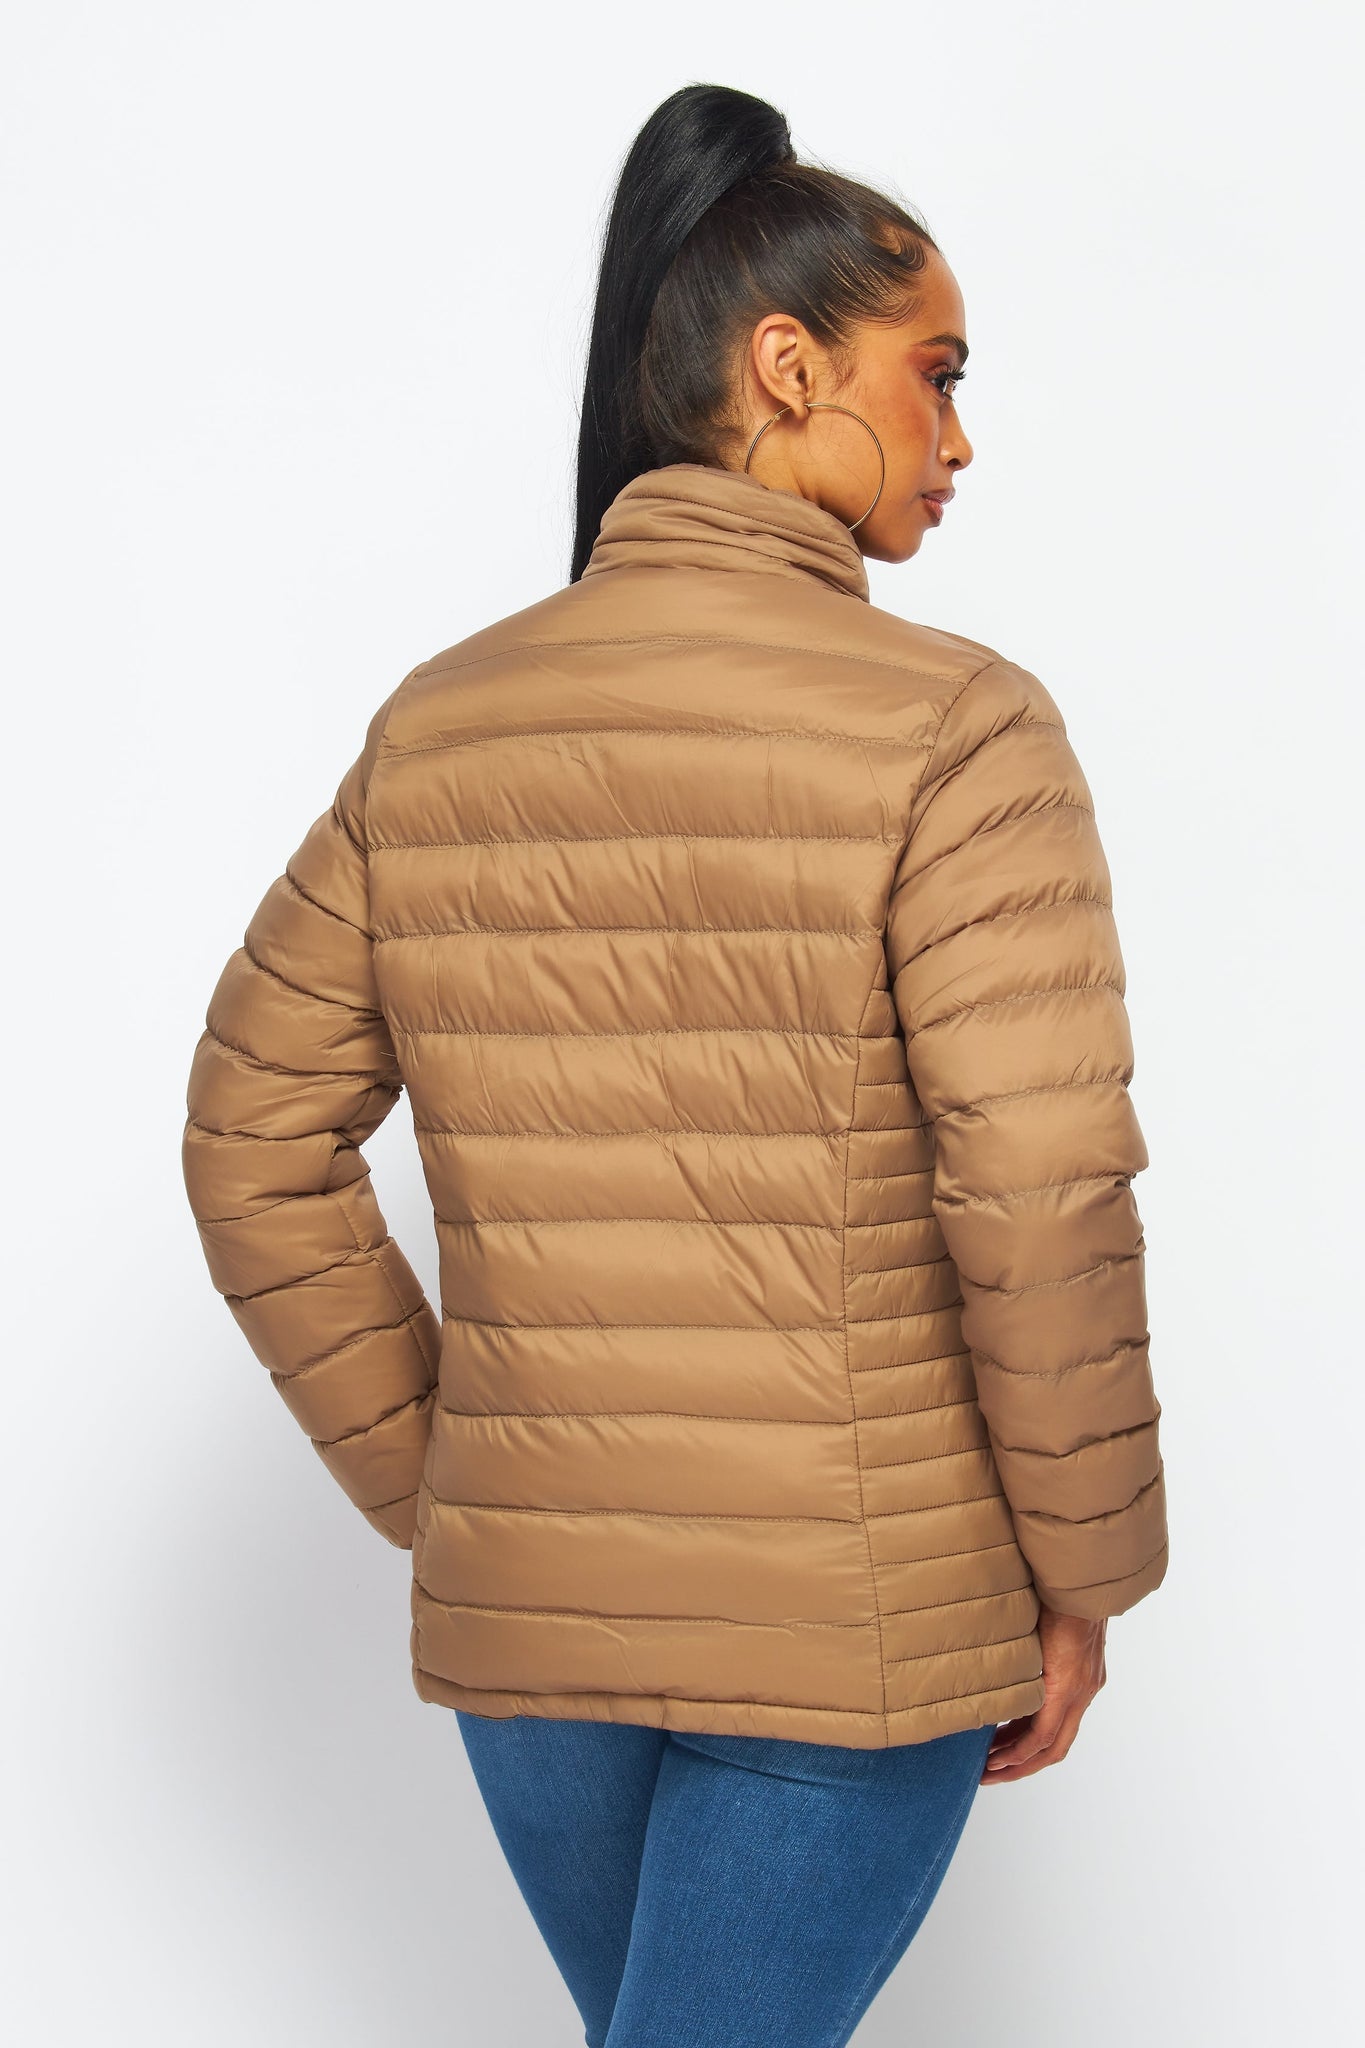 Women's Soft Coated Winter Puffer Jackets-LJ640 - KHAKI